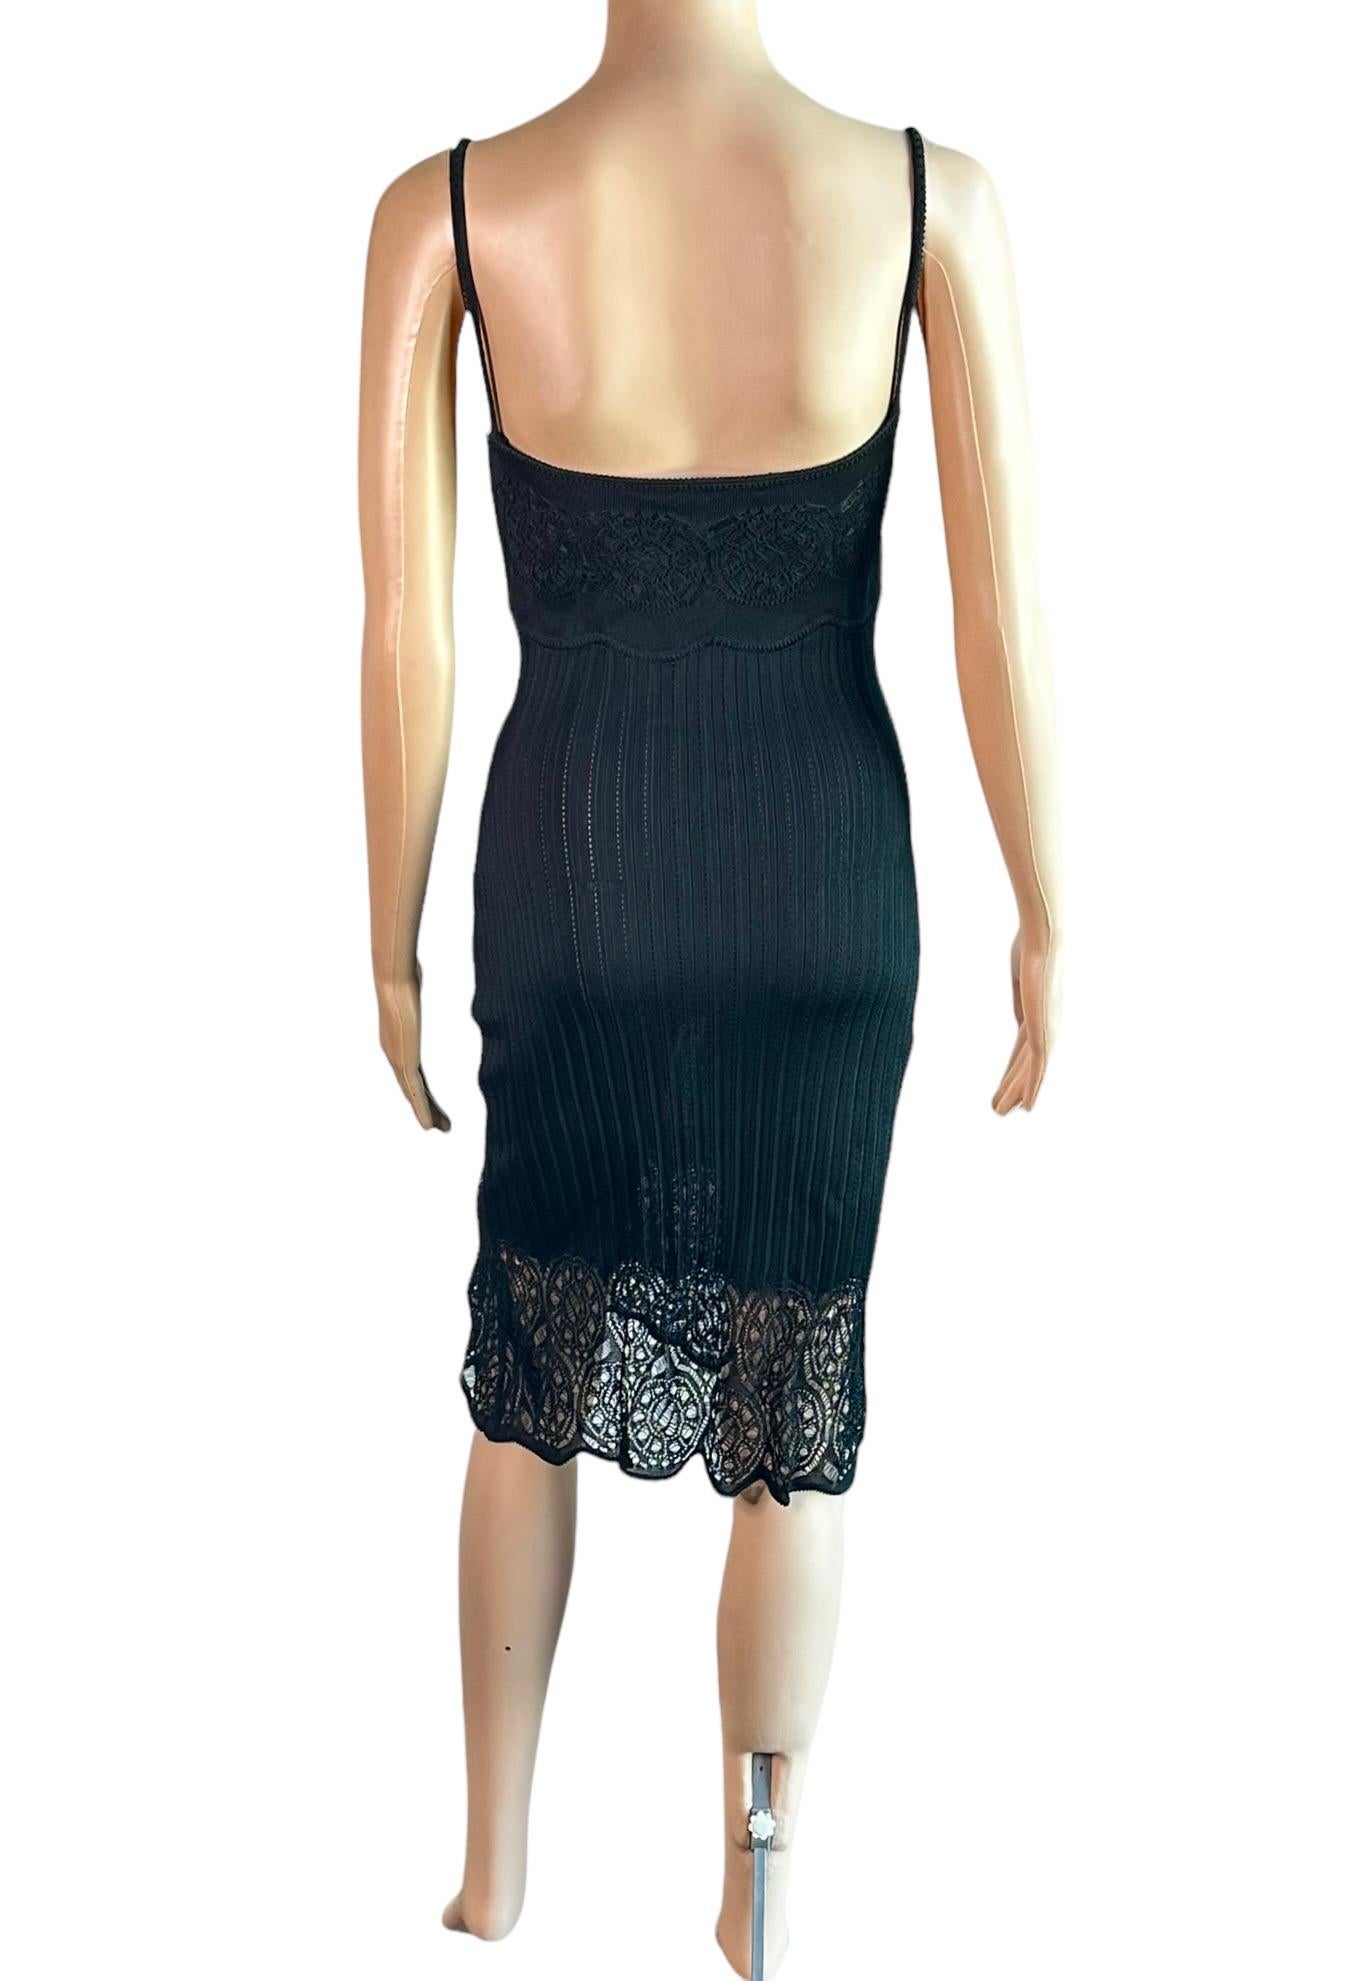 John Galliano S/S 1999 Sheer Lace Open Knit Black Mini Dress For Sale 3